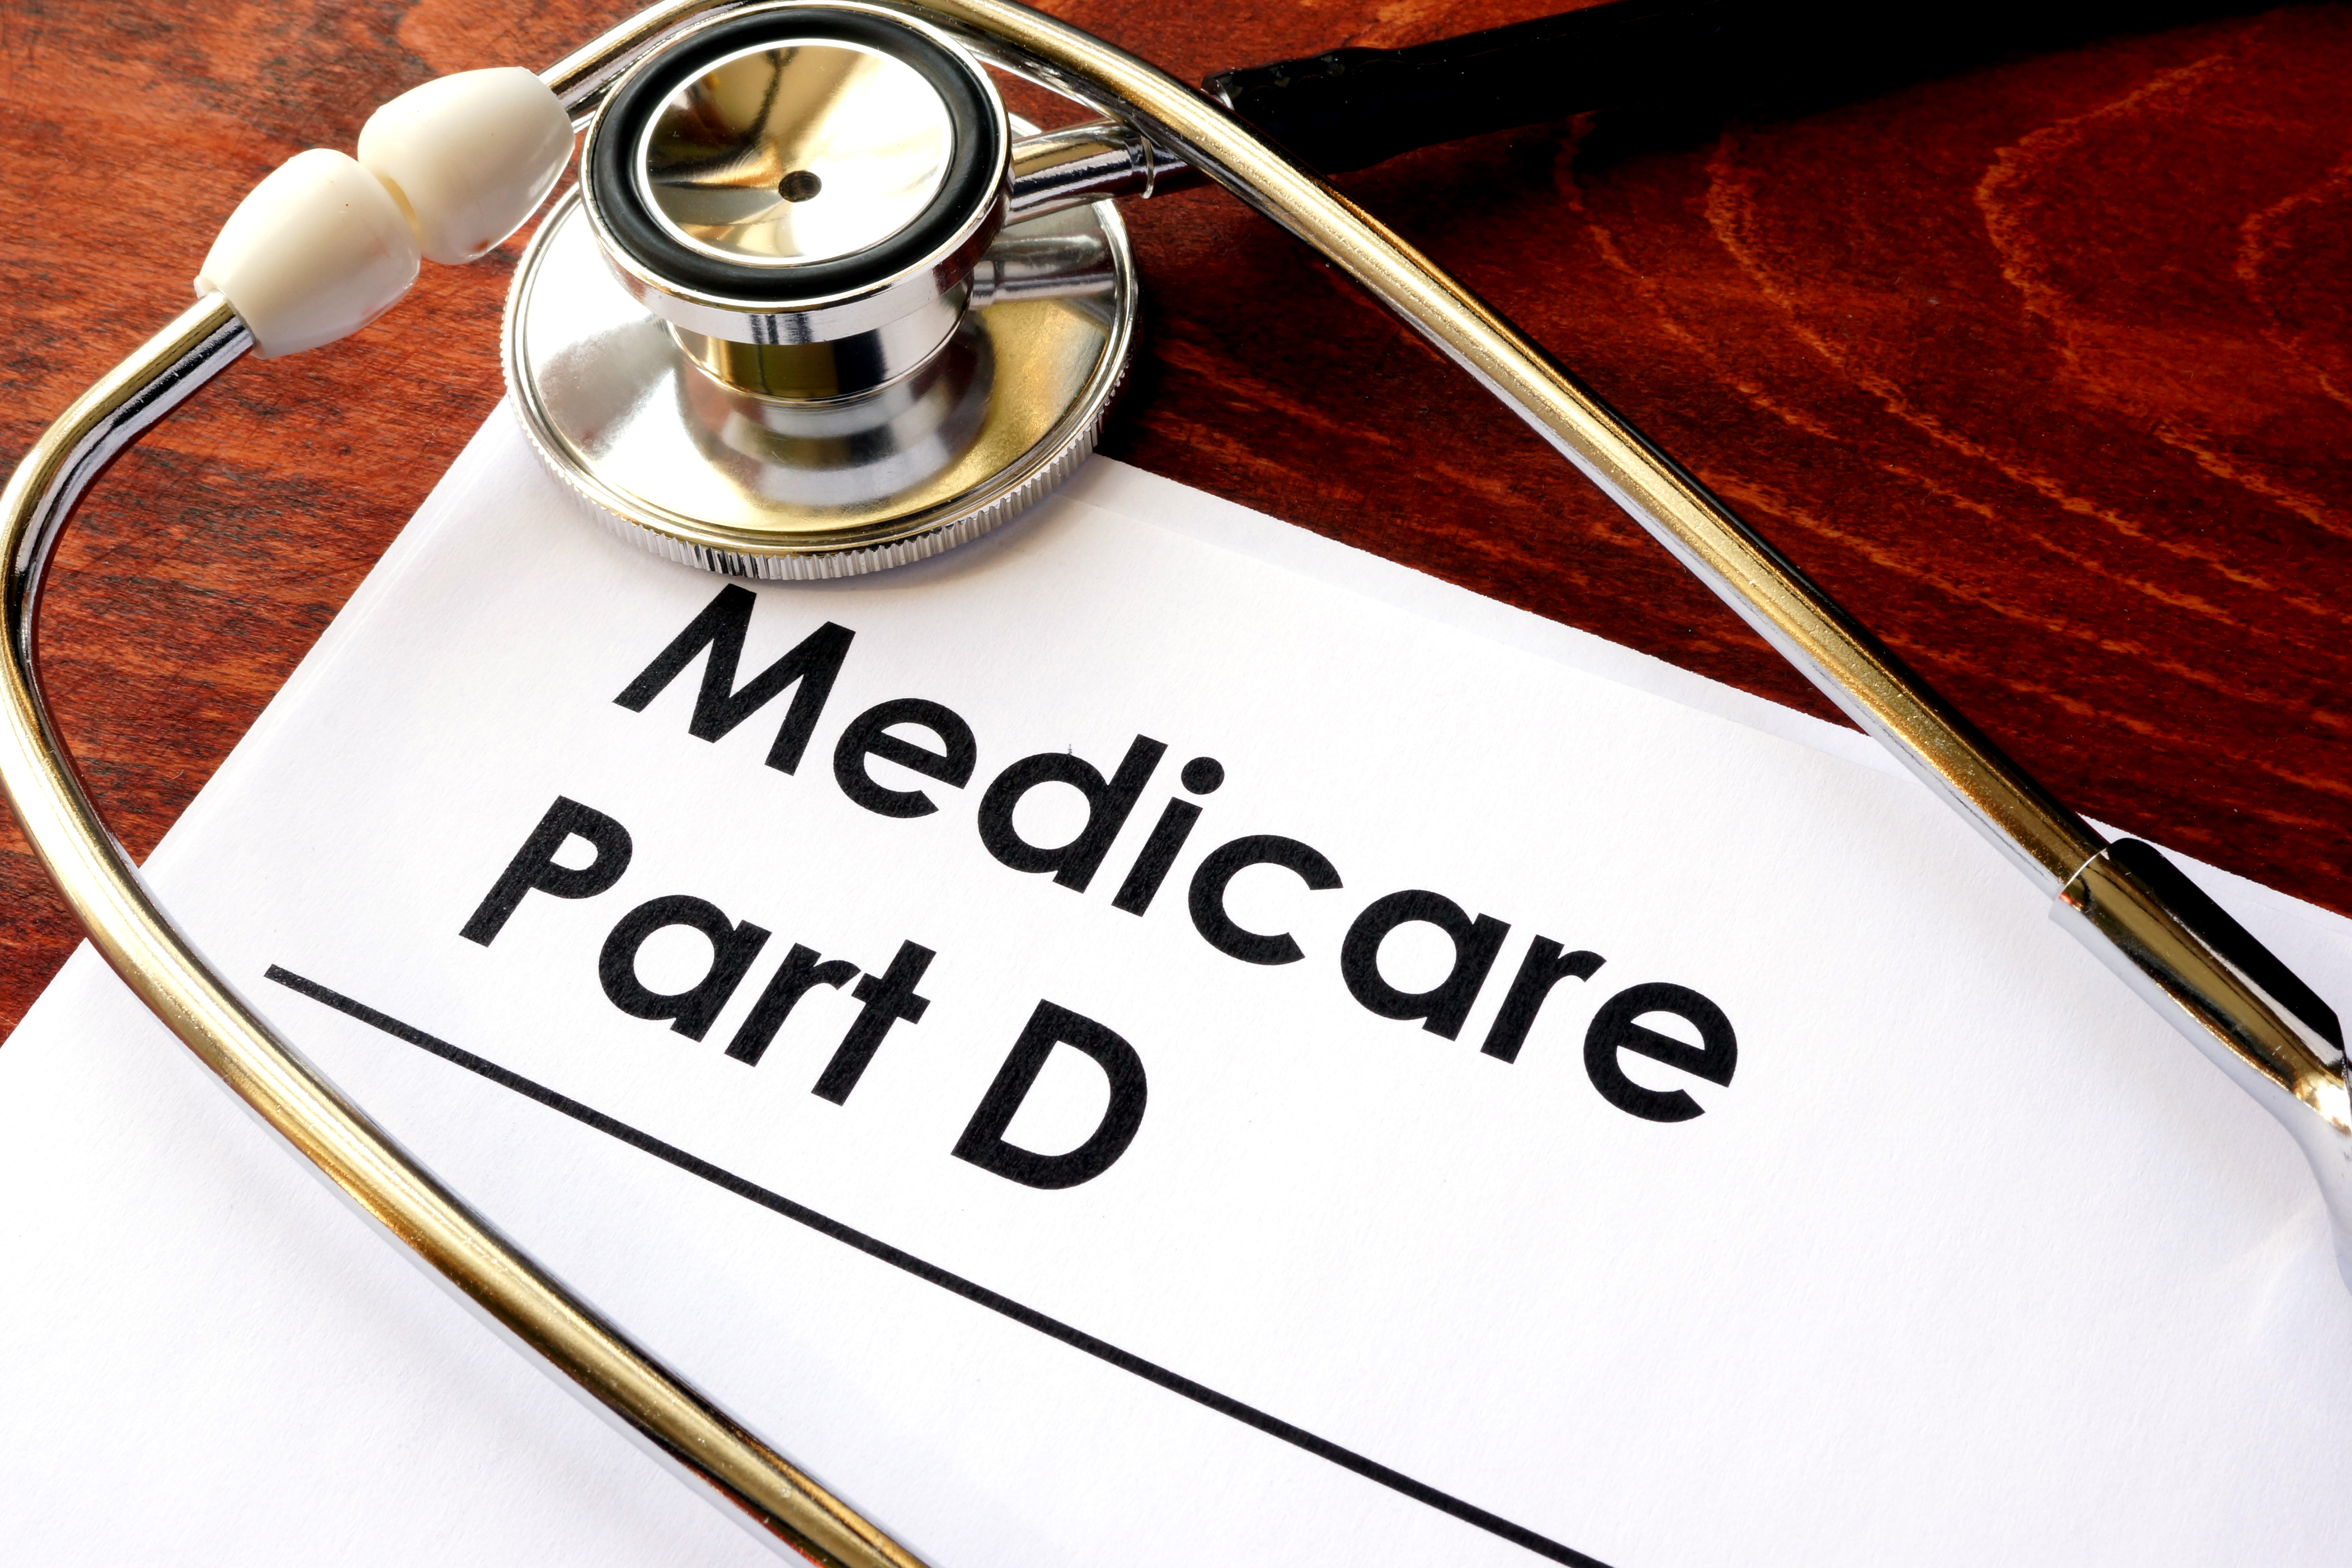 A document that reads Medicare Part D